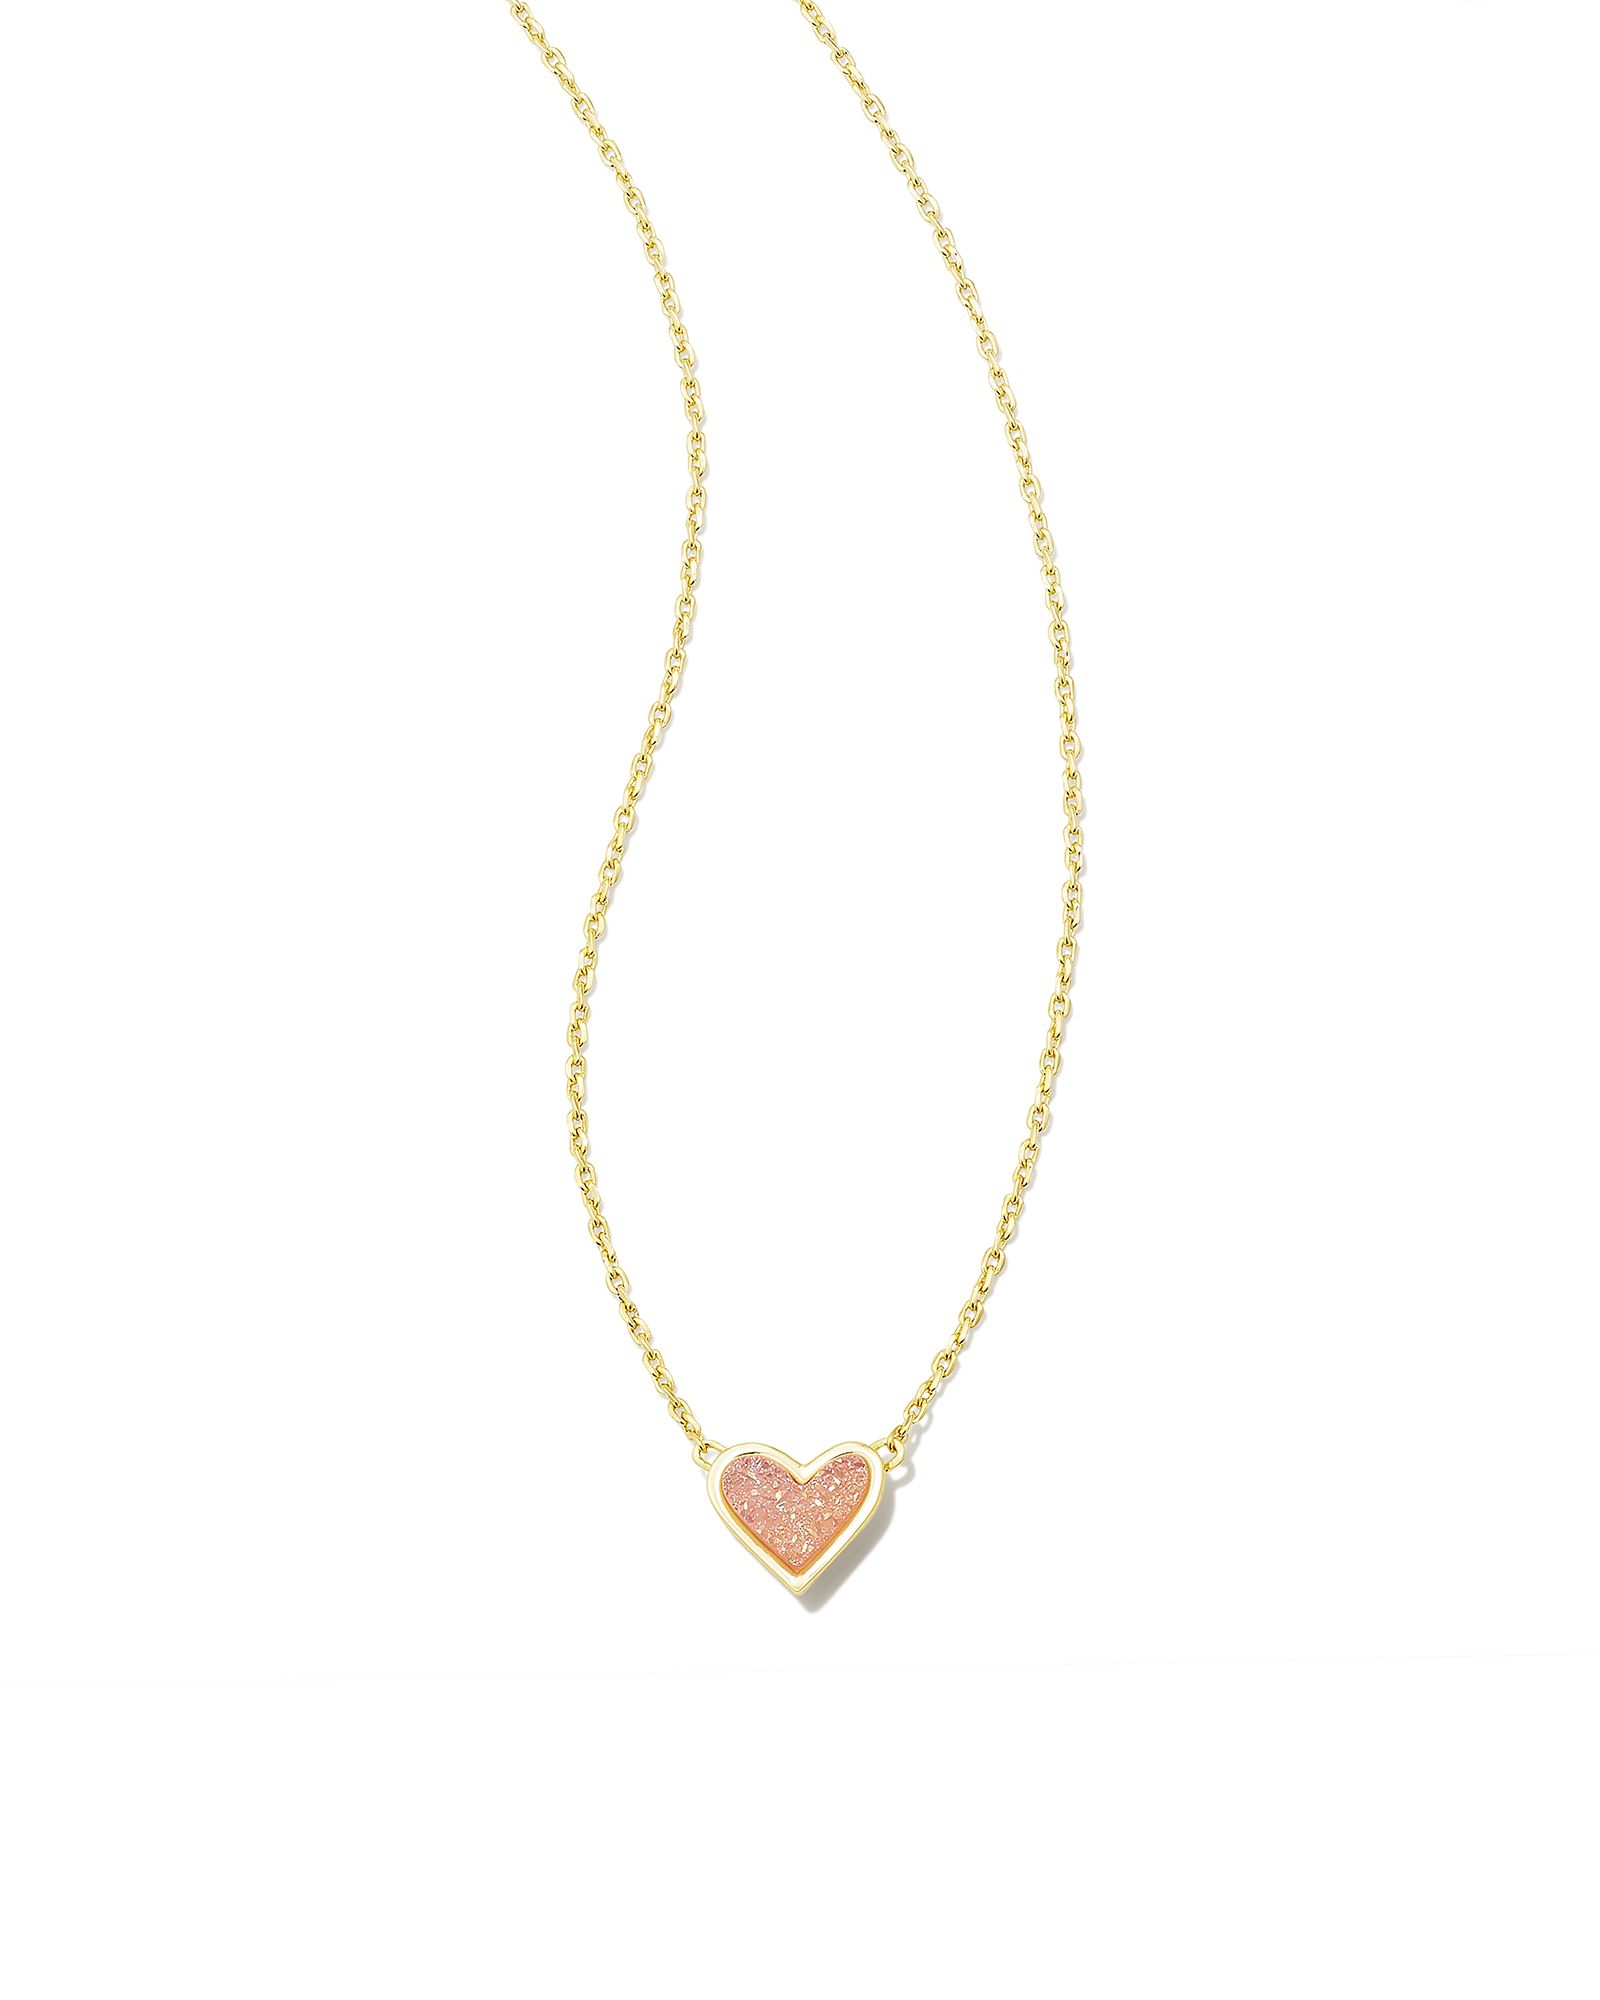 Framed Ari Heart Gold Short Pendant Necklace in Light Pink Drusy | Kendra Scott | Kendra Scott